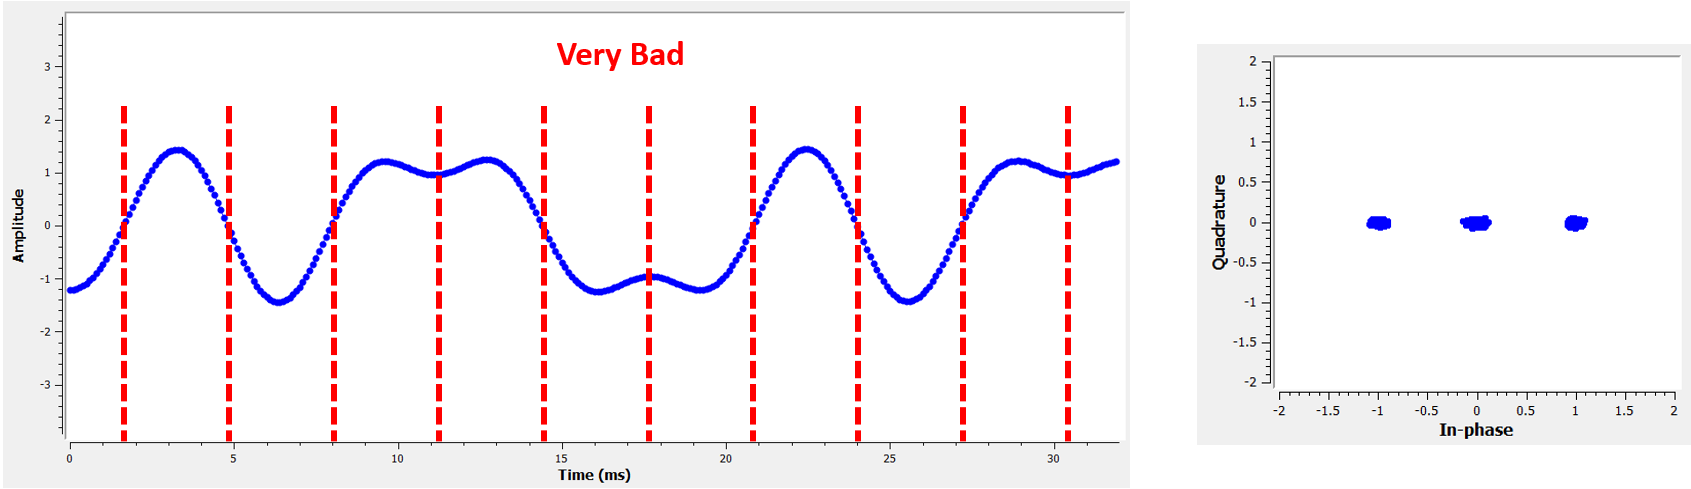 GNU Radio simulation showing imperfect sampling as far as timing